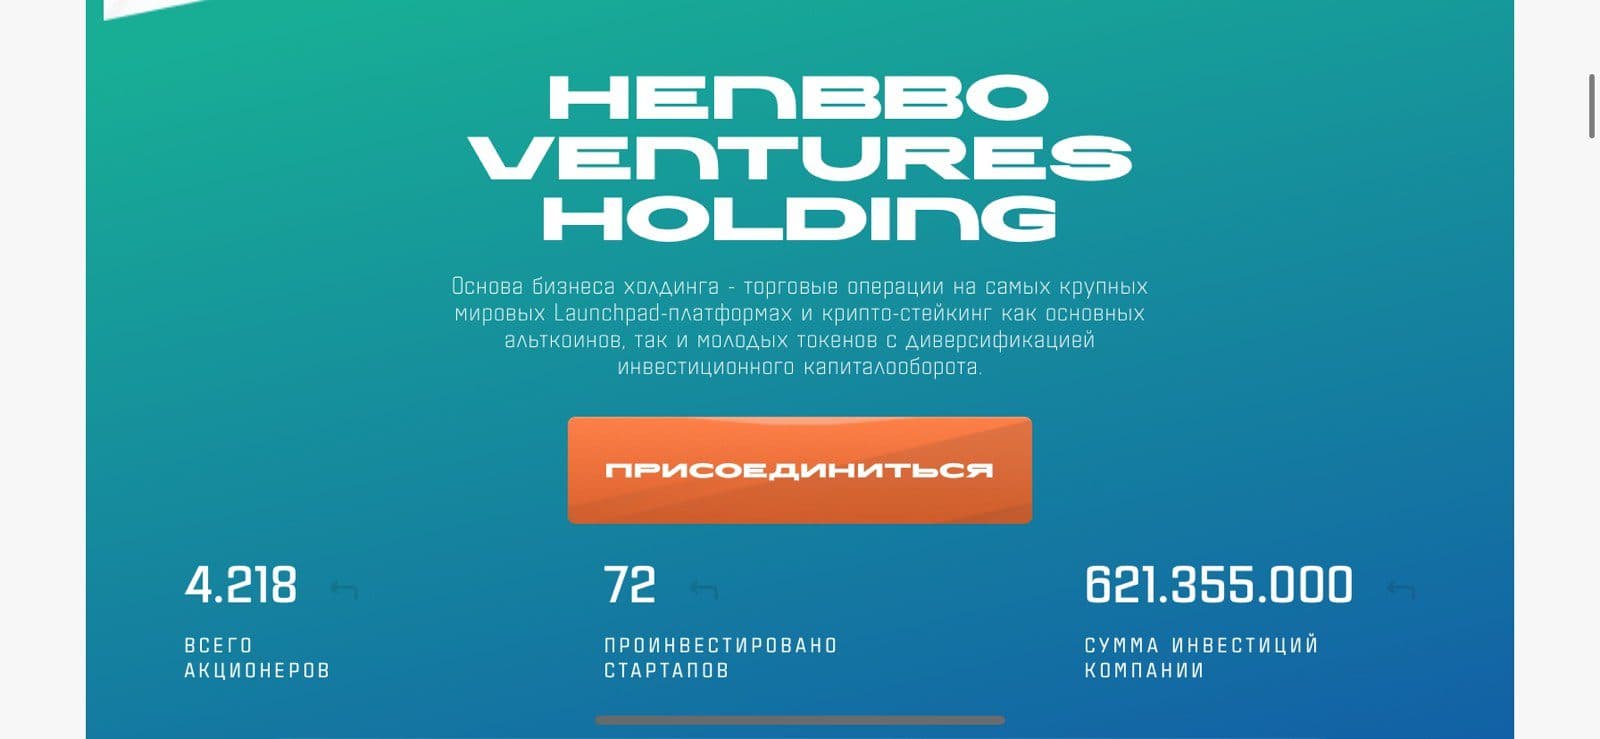 Информация о фонде Henbbo Ventures Holding